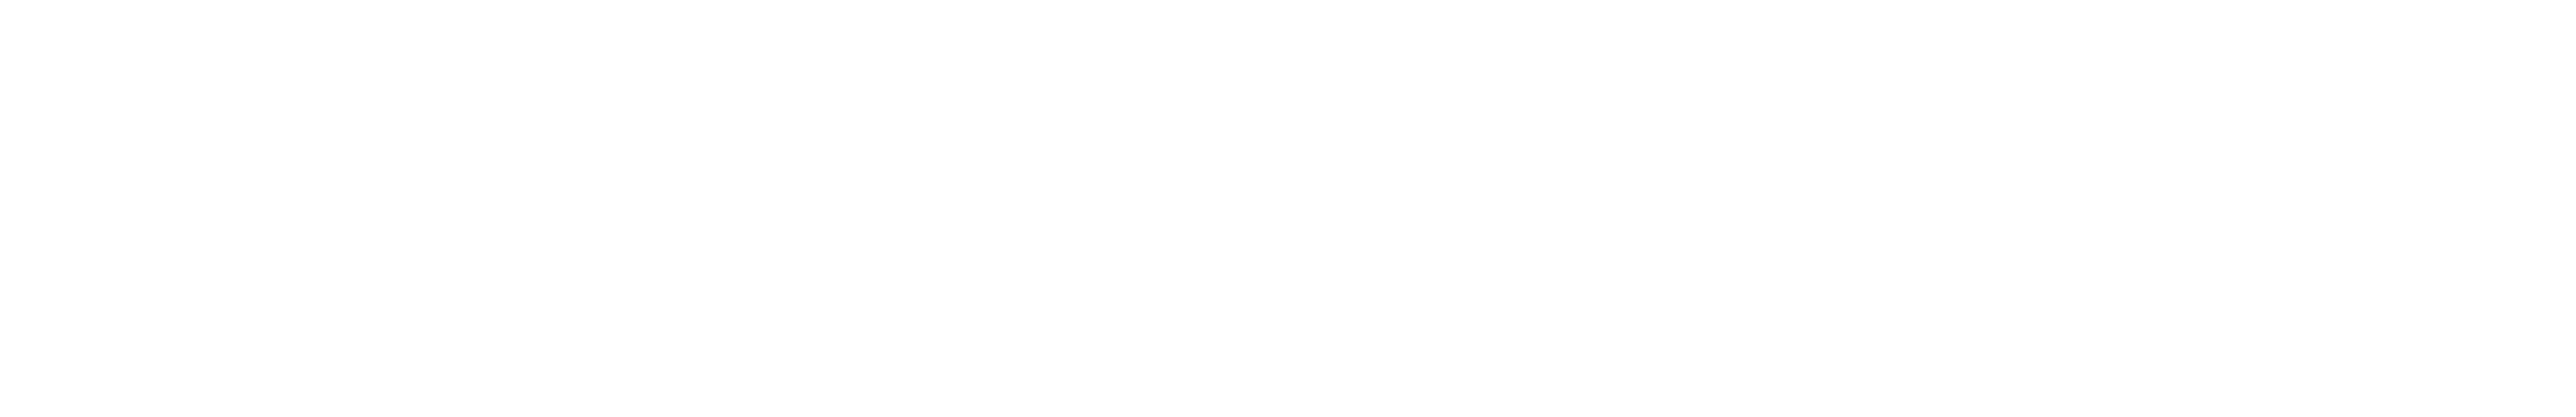 Revista Estrategia Organizacional